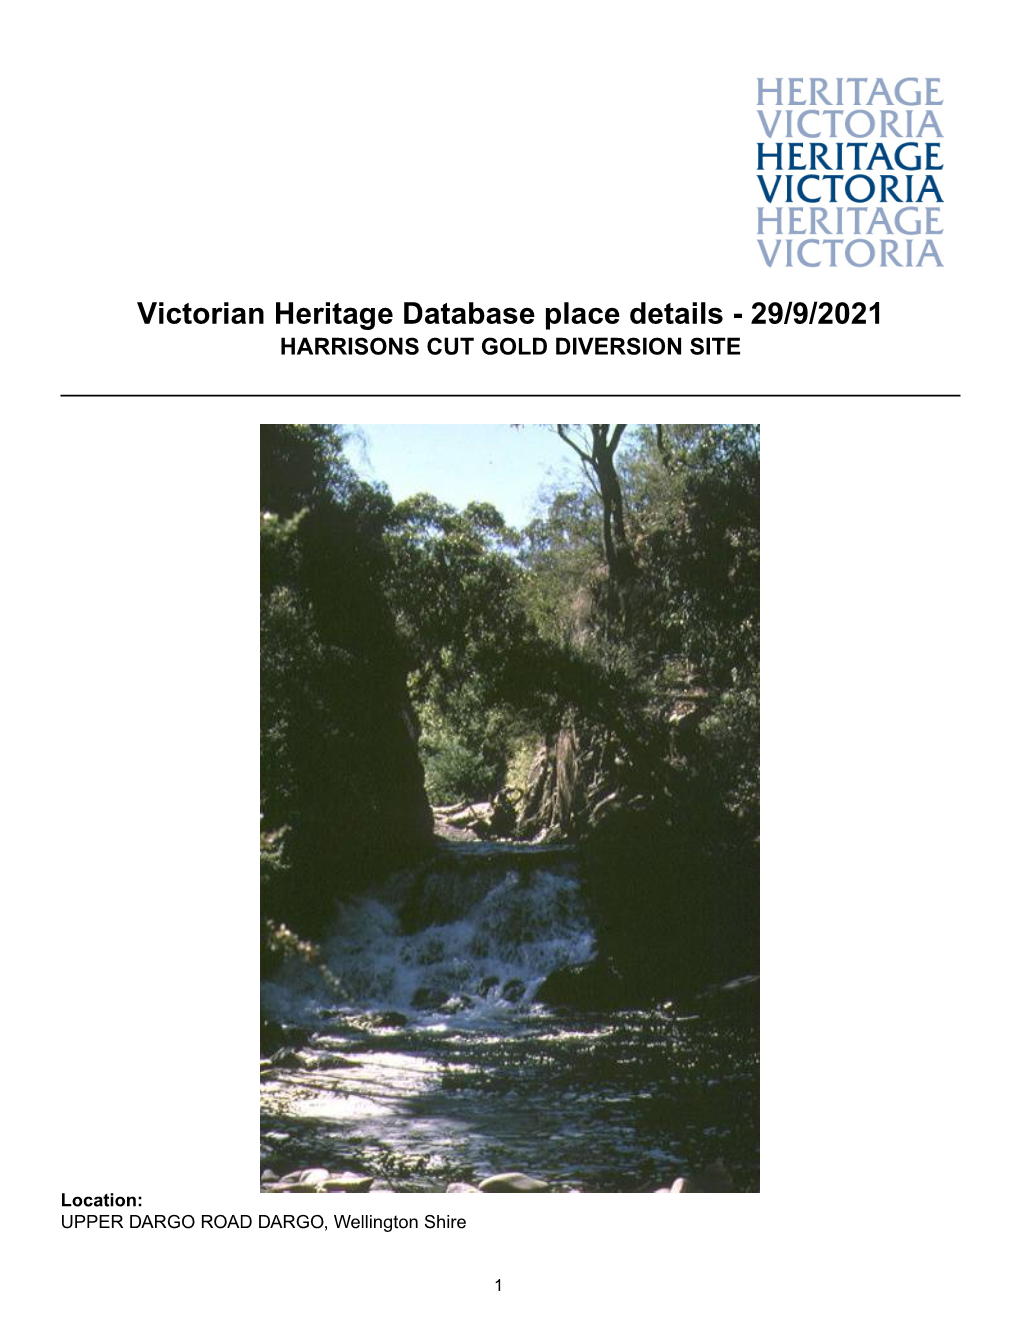 Victorian Heritage Database Place Details - 29/9/2021 HARRISONS CUT GOLD DIVERSION SITE